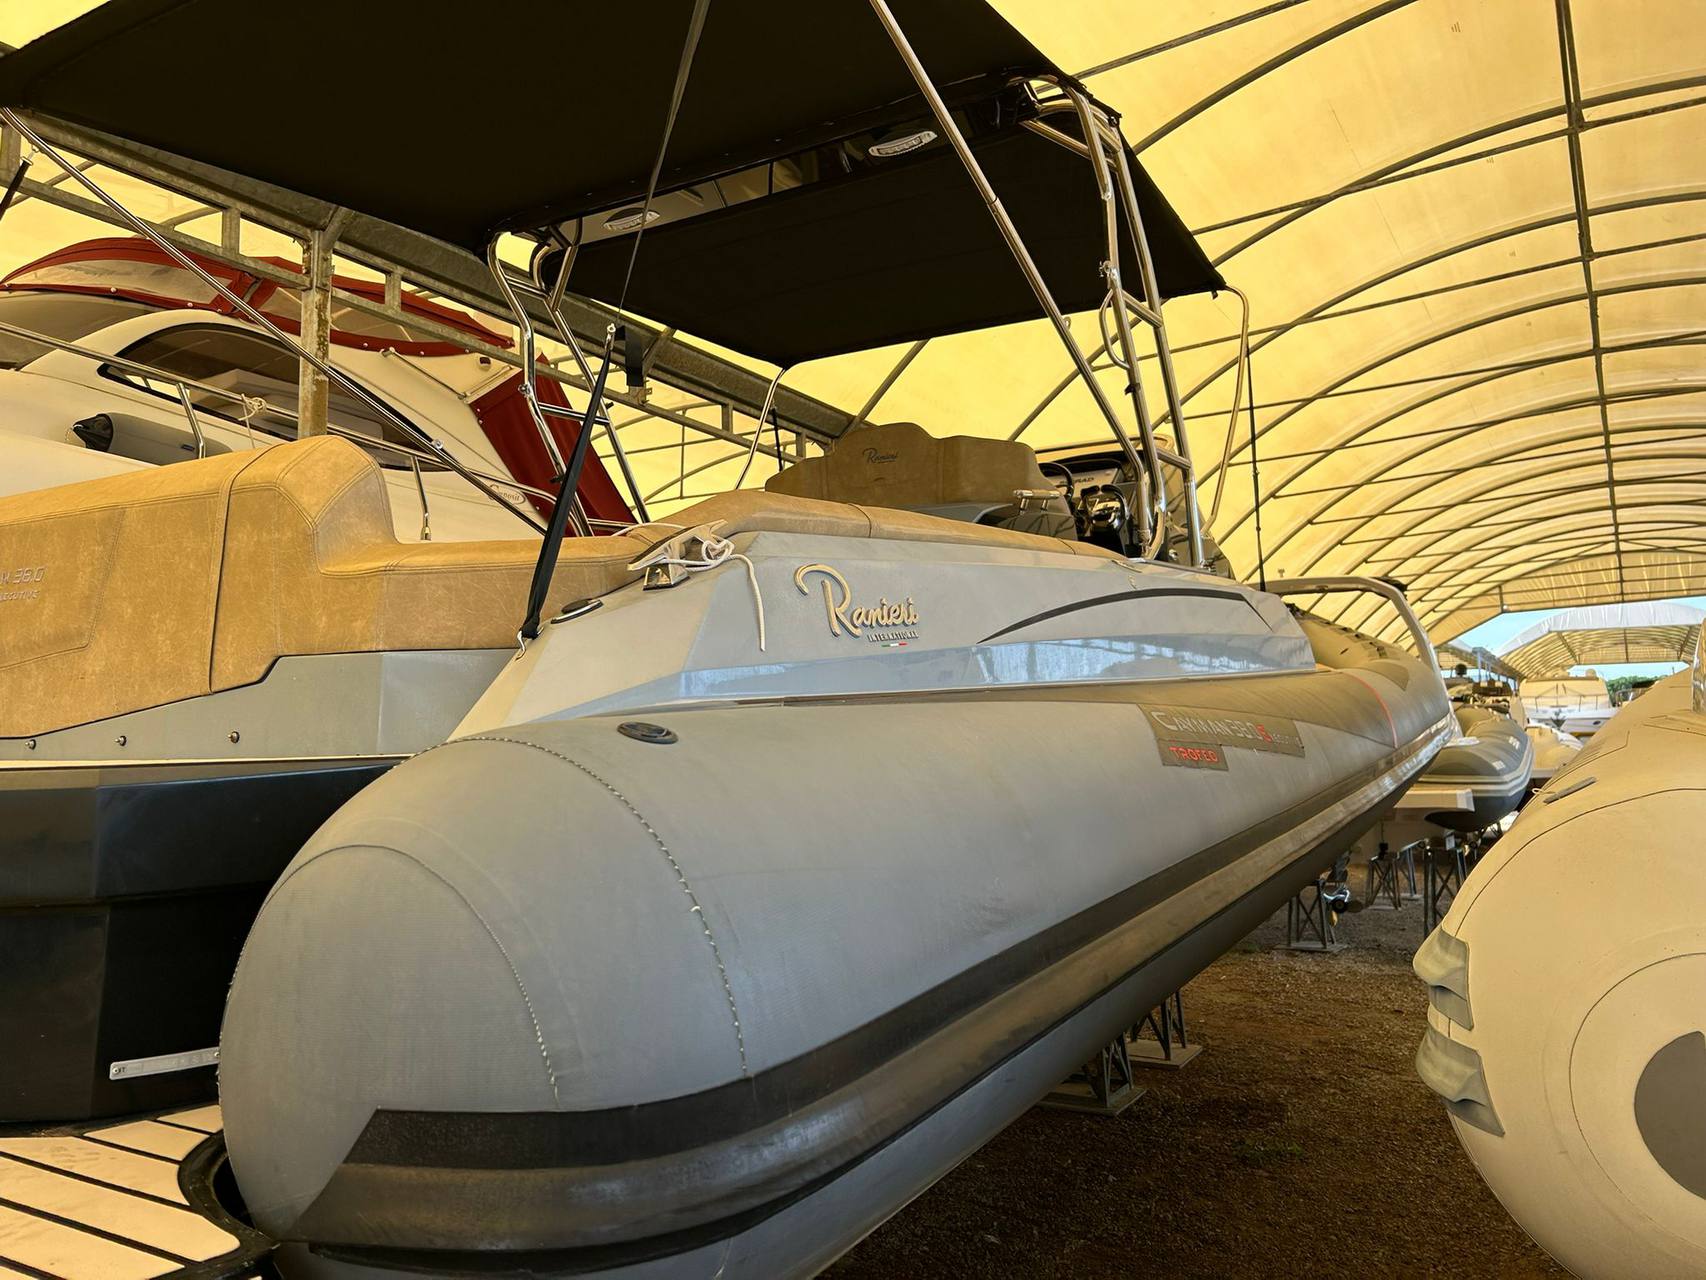 Ranieri International Cayman 38 executive trofeo Inflatable boat used boats for sale